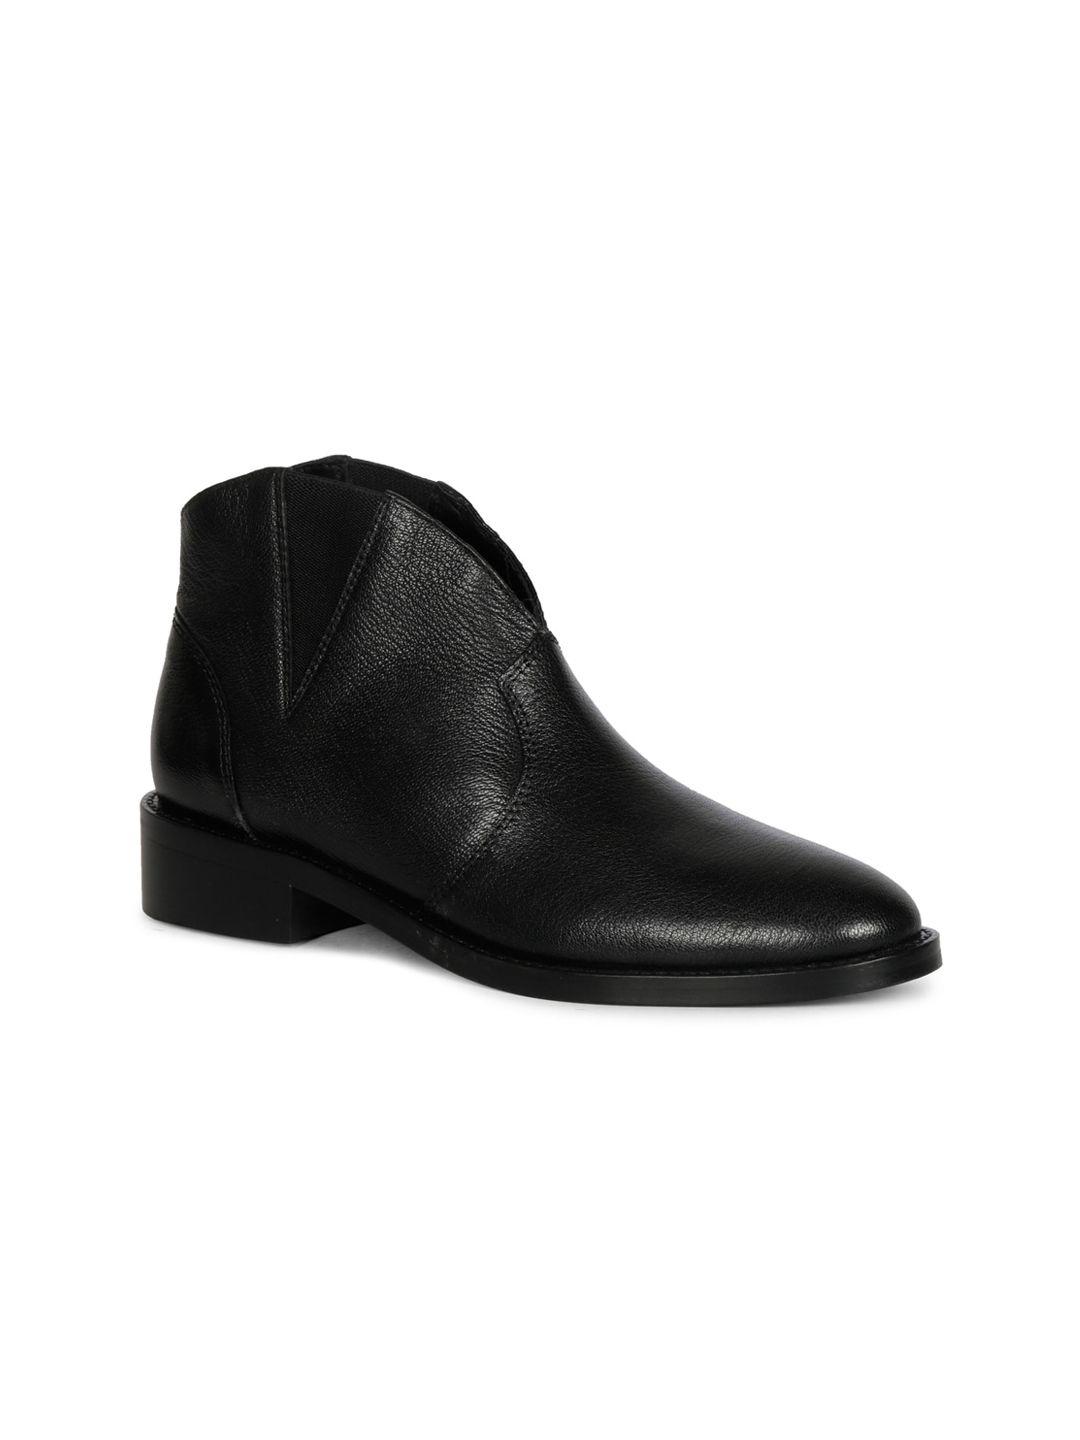 saint-g-women-black-solid-leather-winter-boots